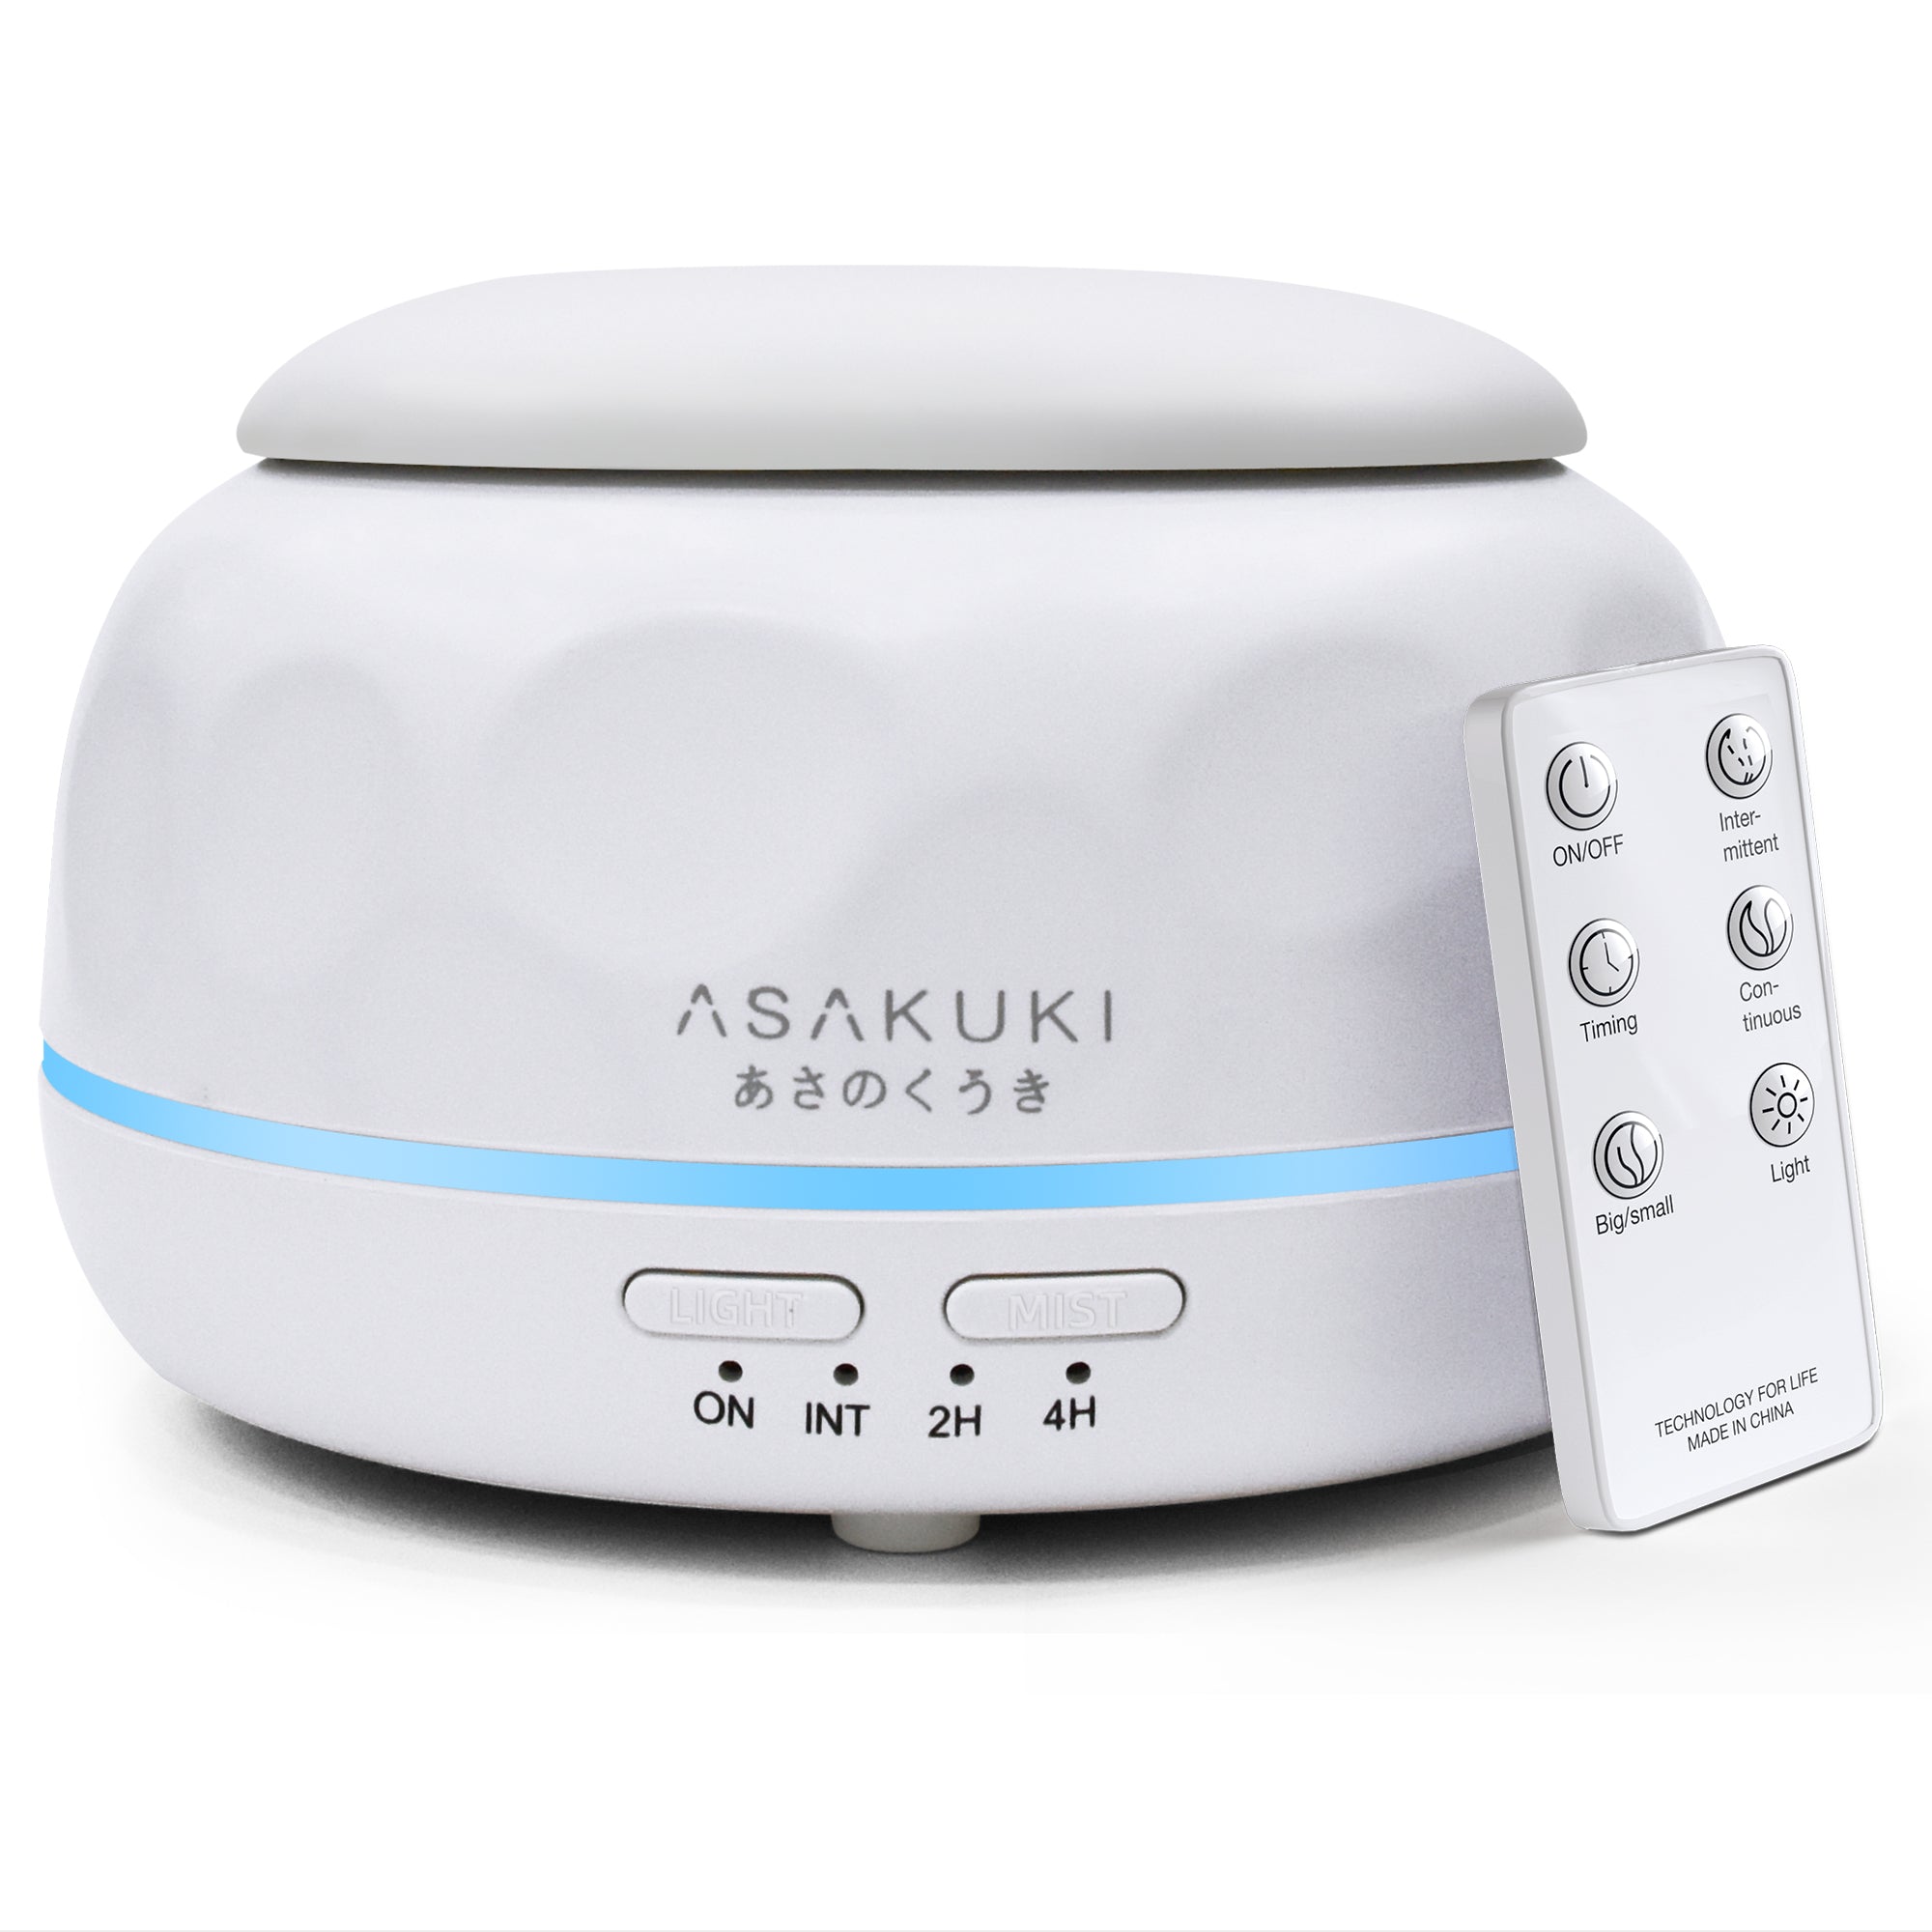 ASAKUKI ARC 300ML Essential Oil Diffuser & Aromatherapy Humidifier